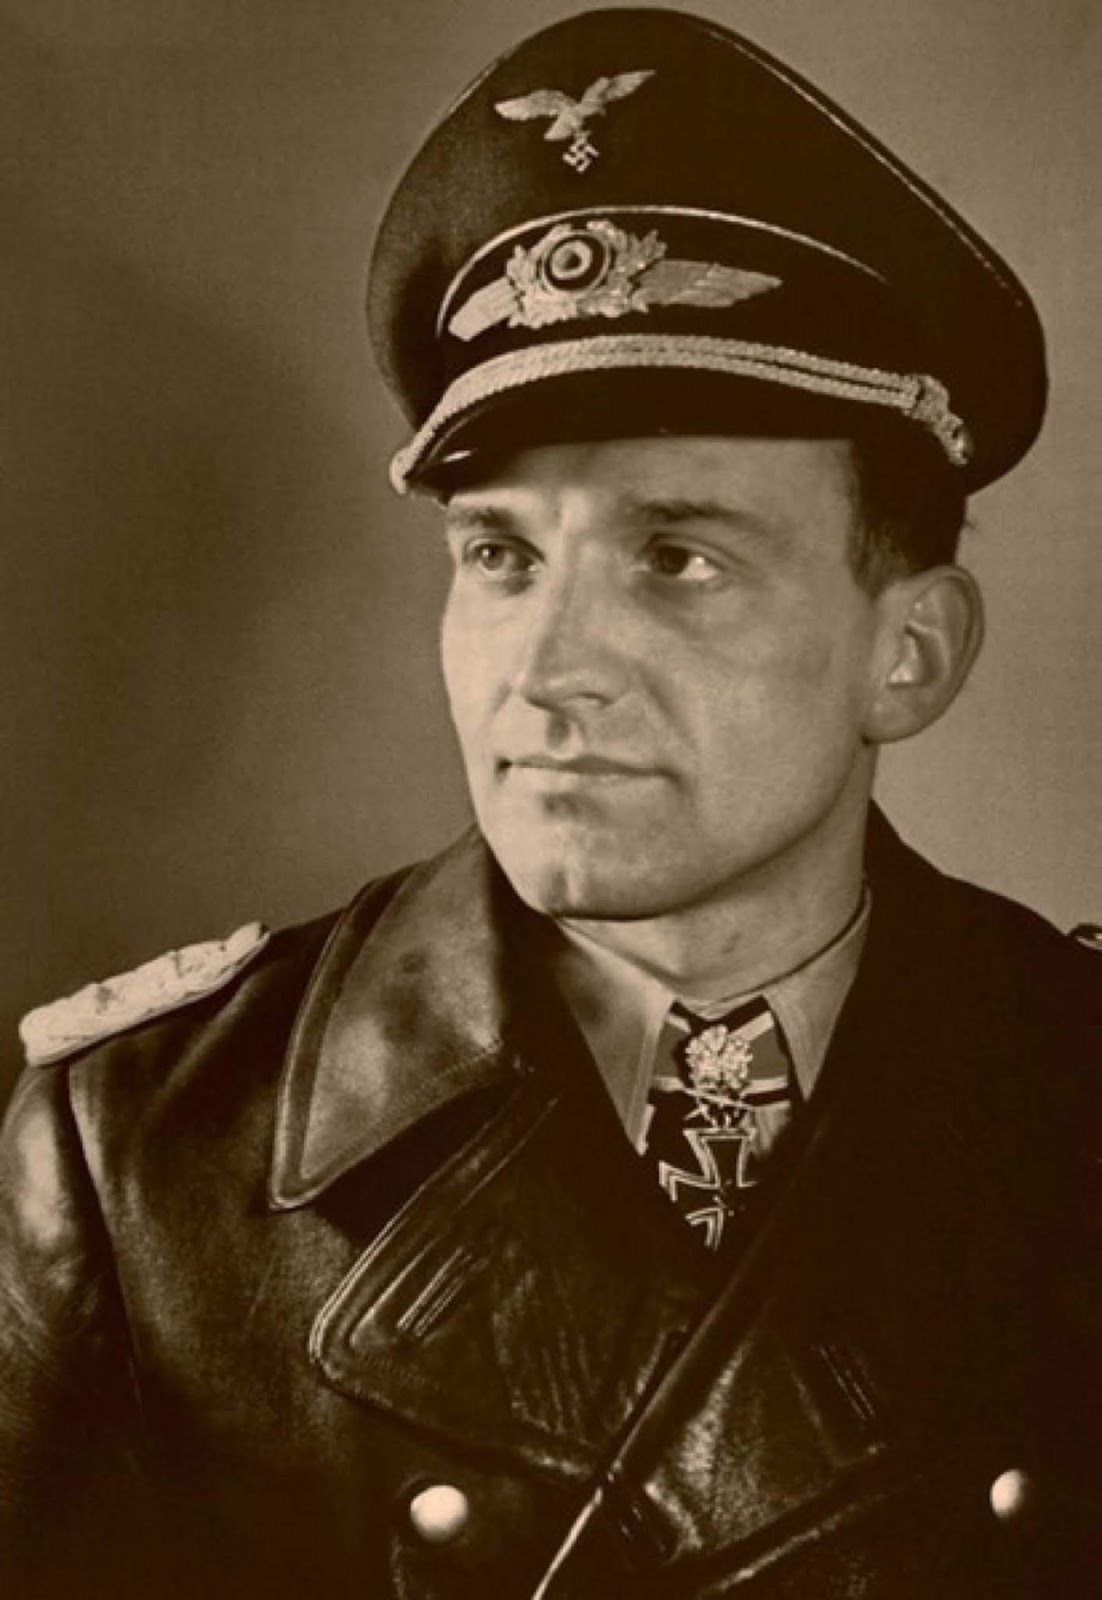 Hans Ulrich Rudel. Luftwaffe legend. And, male model wannabe.